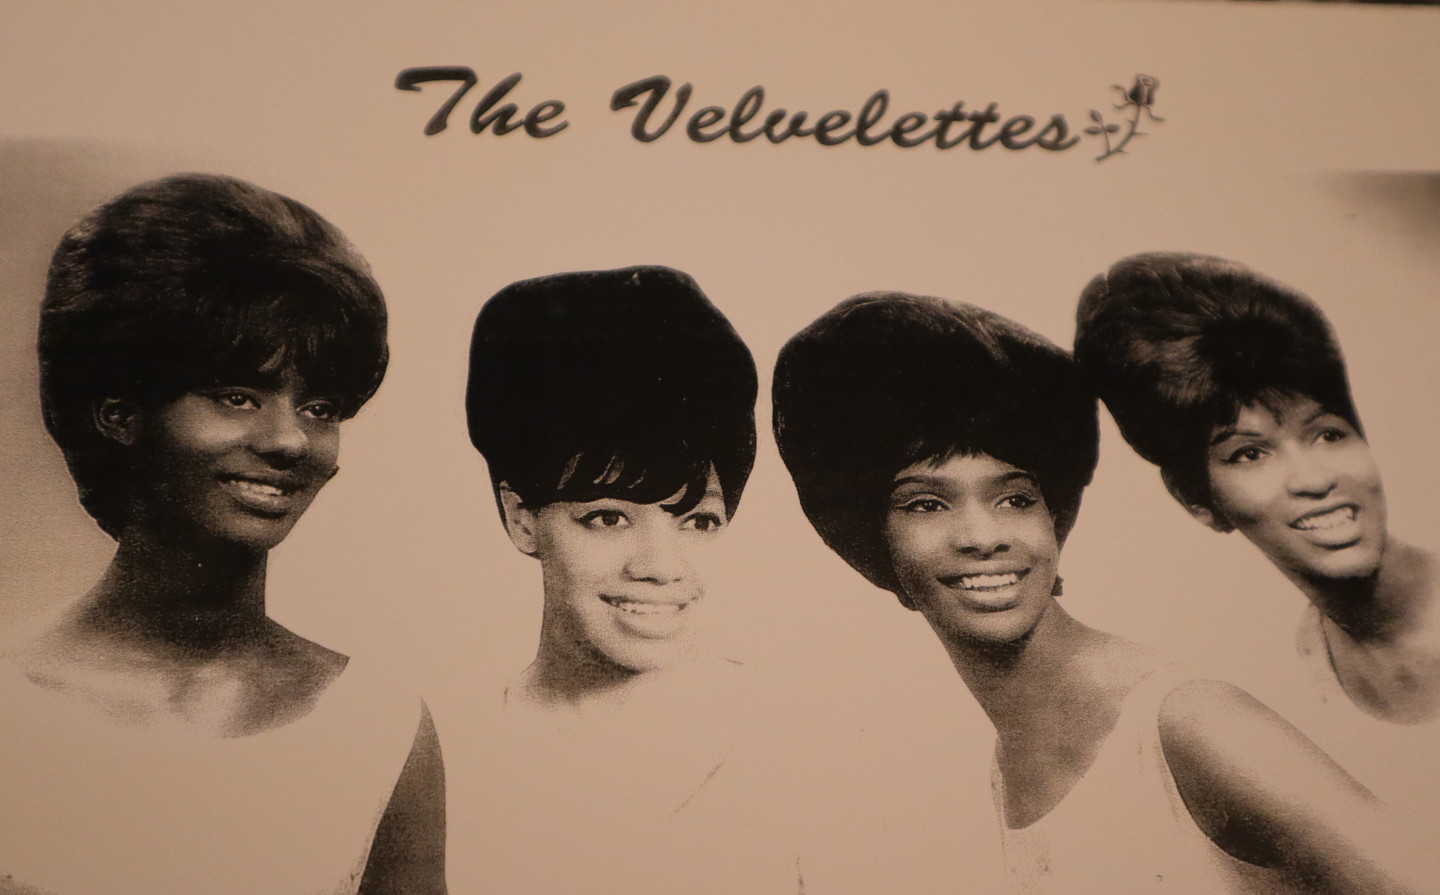 A black and white photo of The Velvelettes.